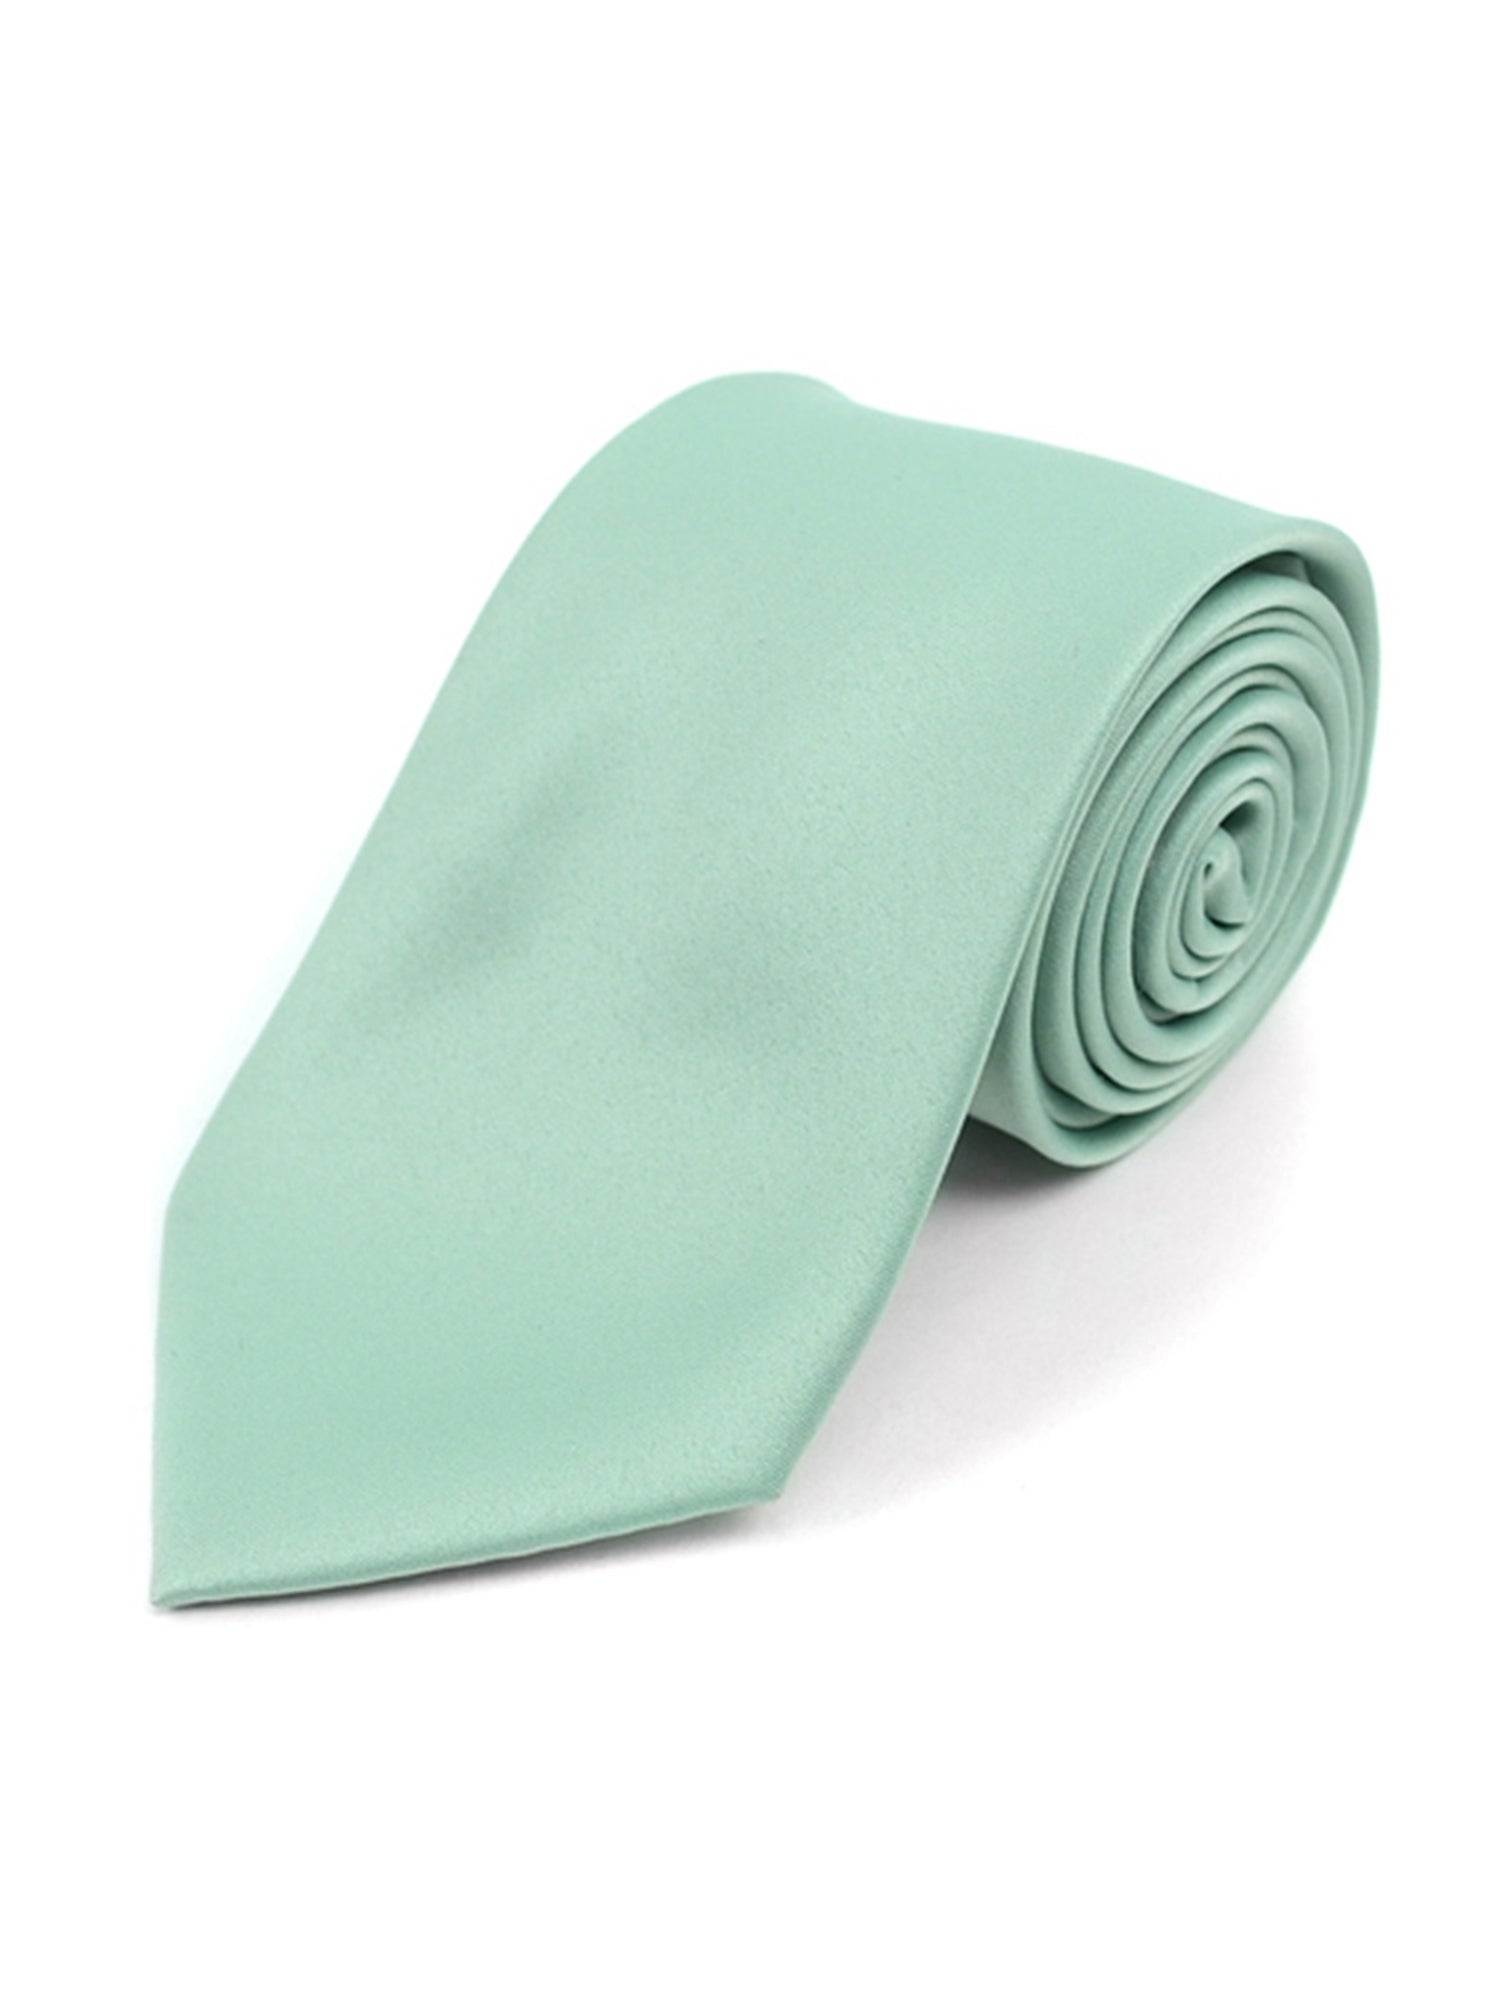 Boy's Age 12-18 Solid Color Poly Neck Tie Boy's Solid Color Neck Tie TheDapperTie Mint 49" 